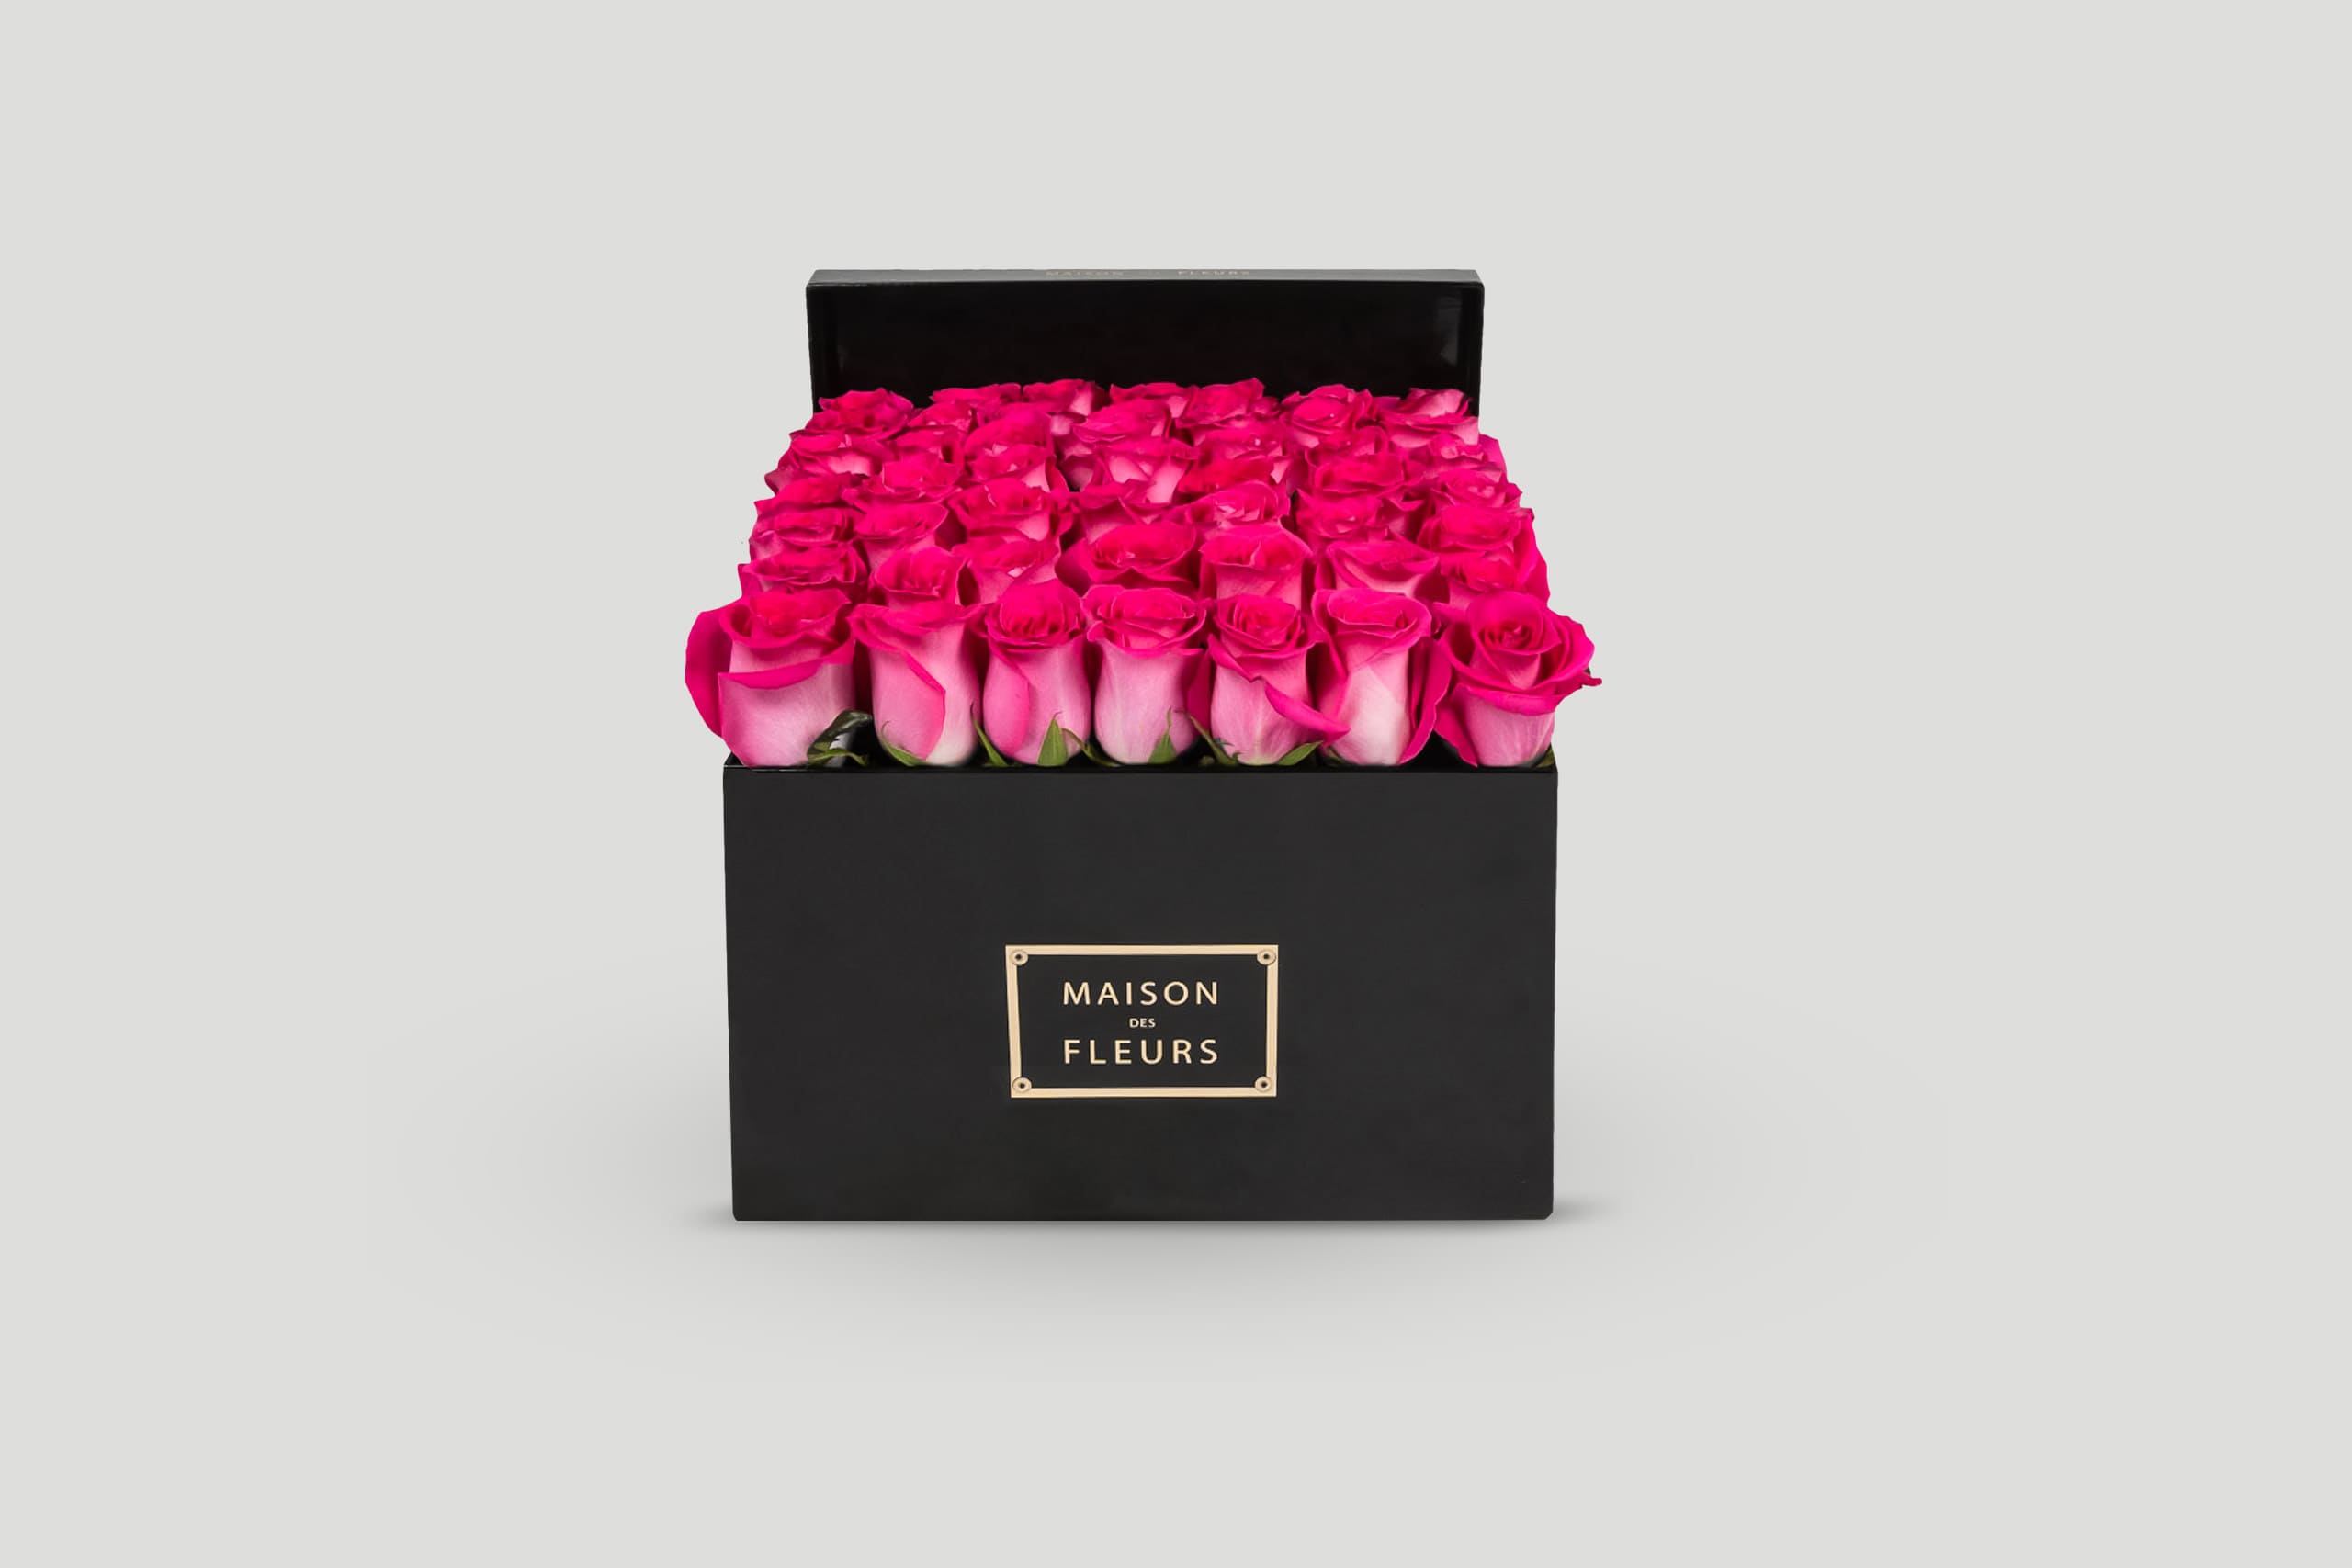 Fuschia Long Life Roses in a Large Black Box